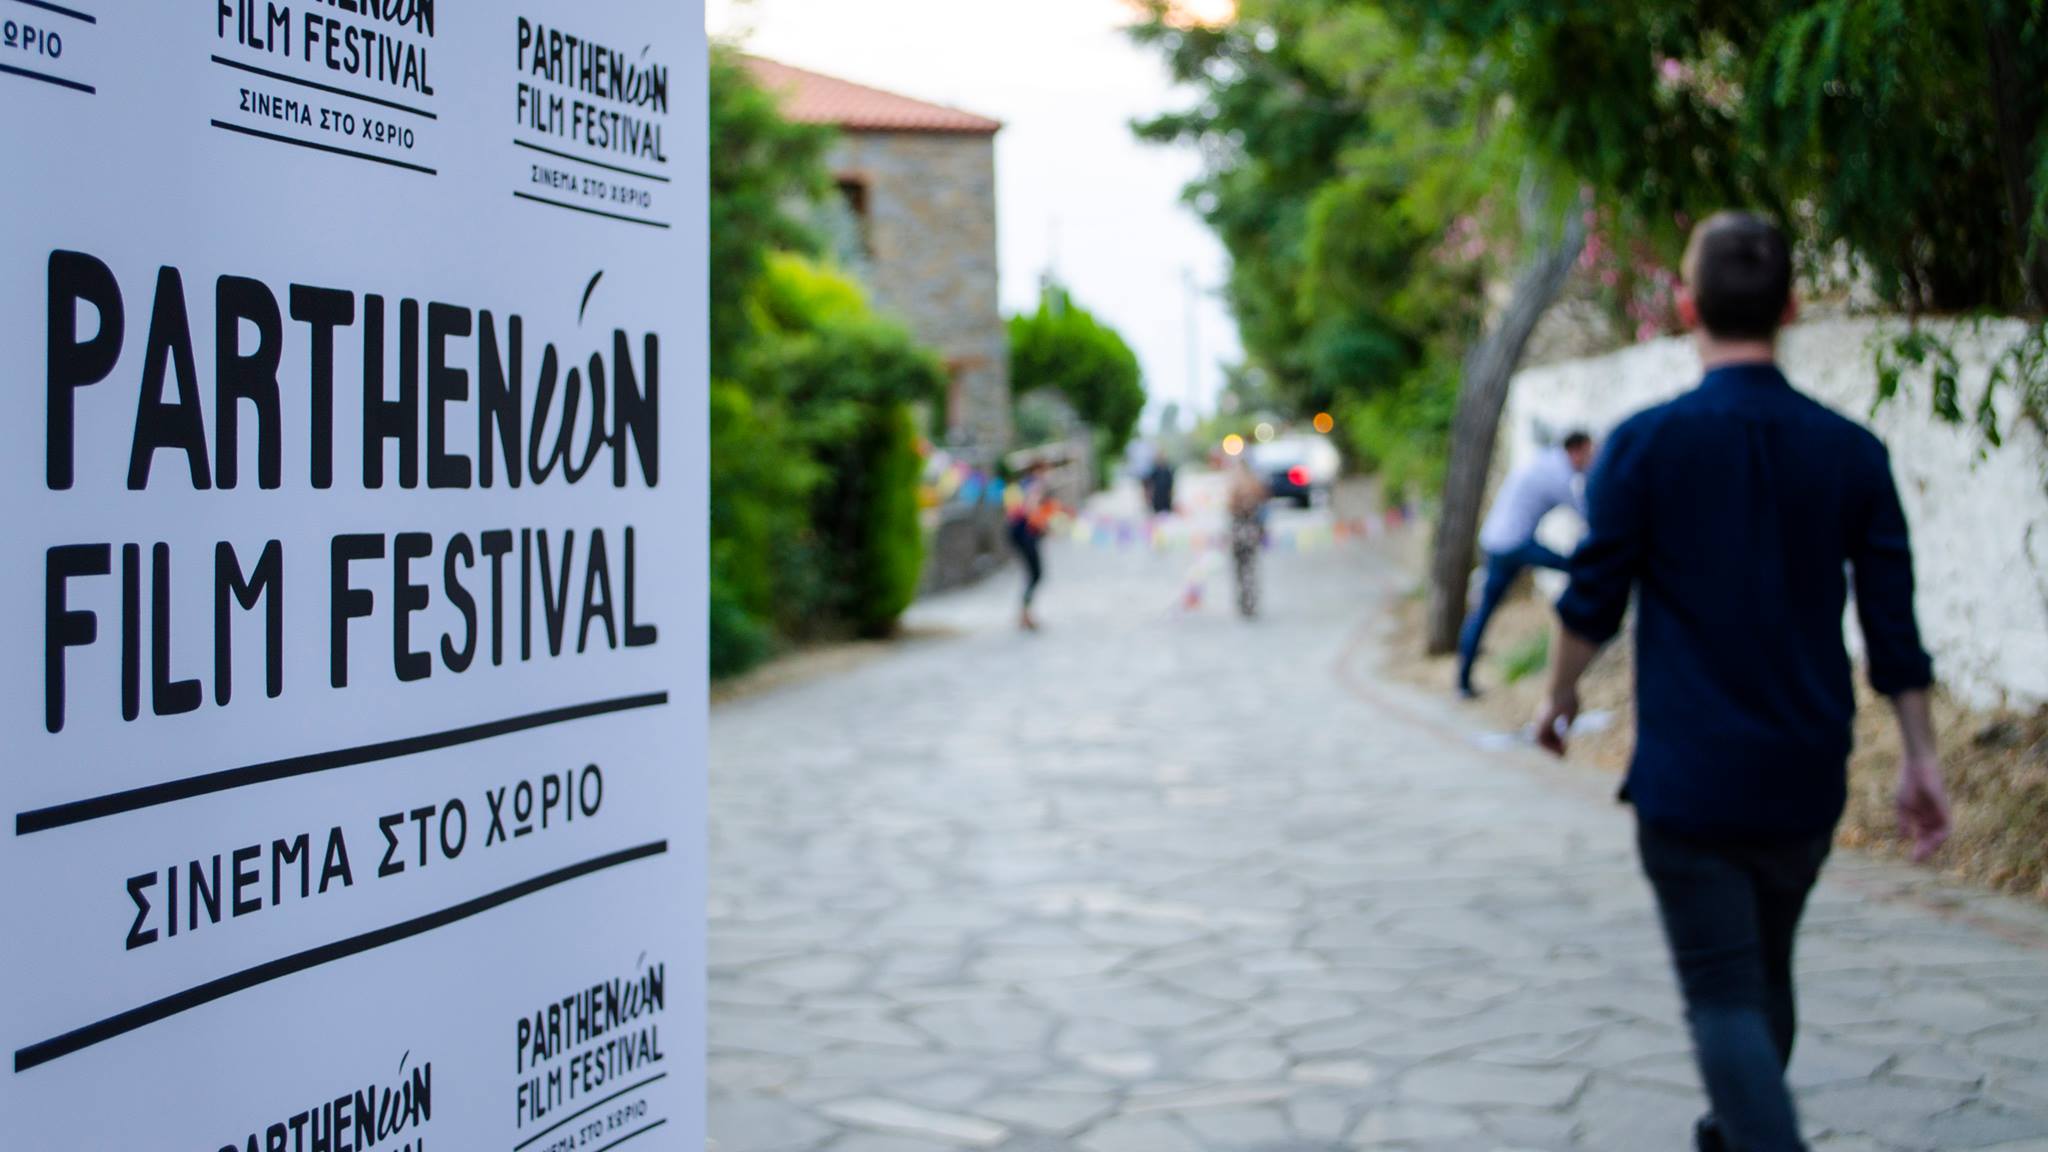 Parthenώn Film Festival: Πάμε σινεμά στο χωριό;